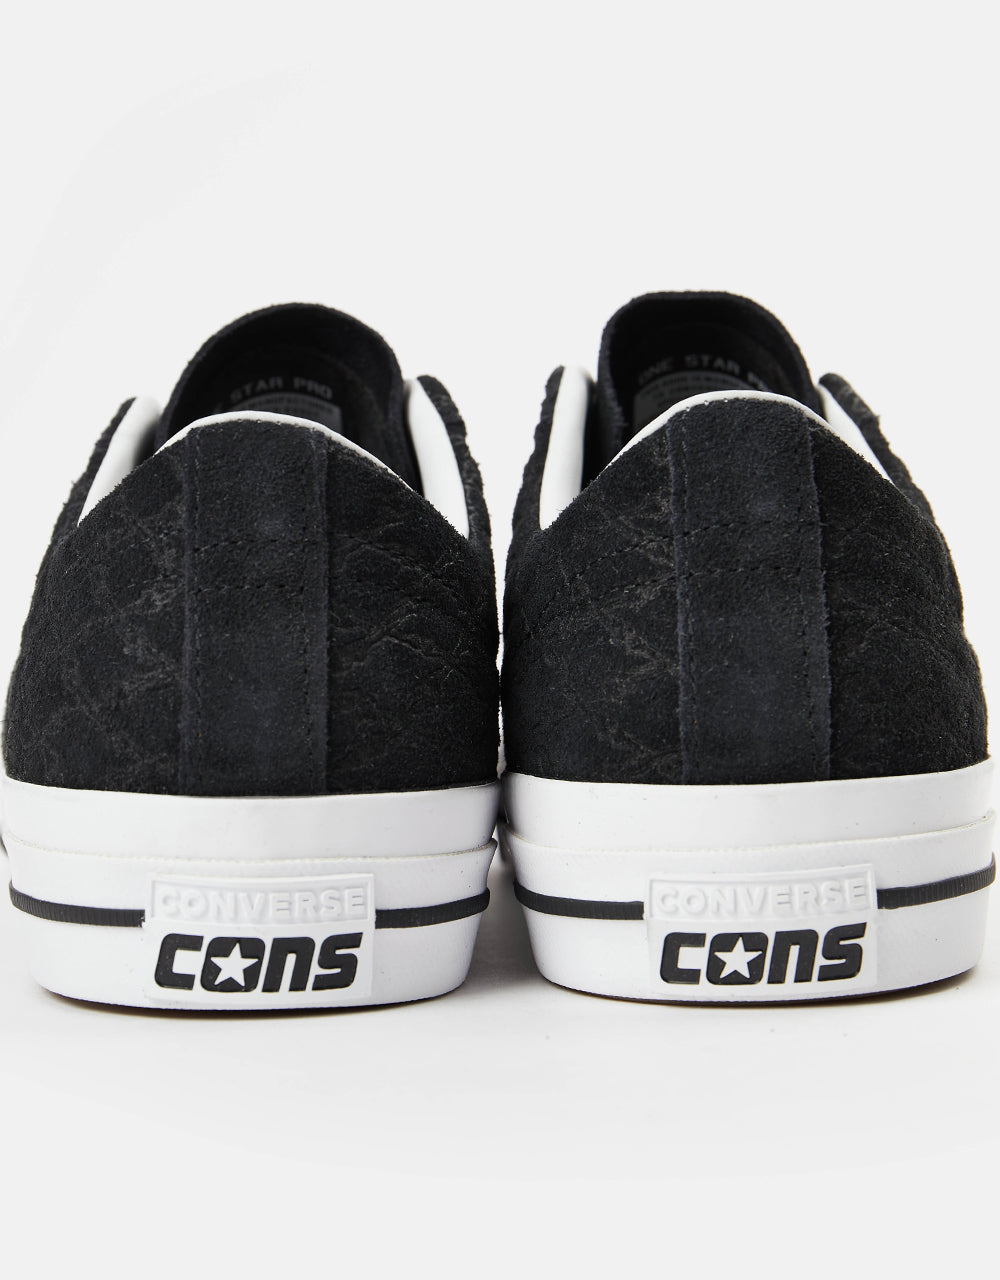 Converse One Star Pro Ox Bones Skate Shoes - Black/Black/White